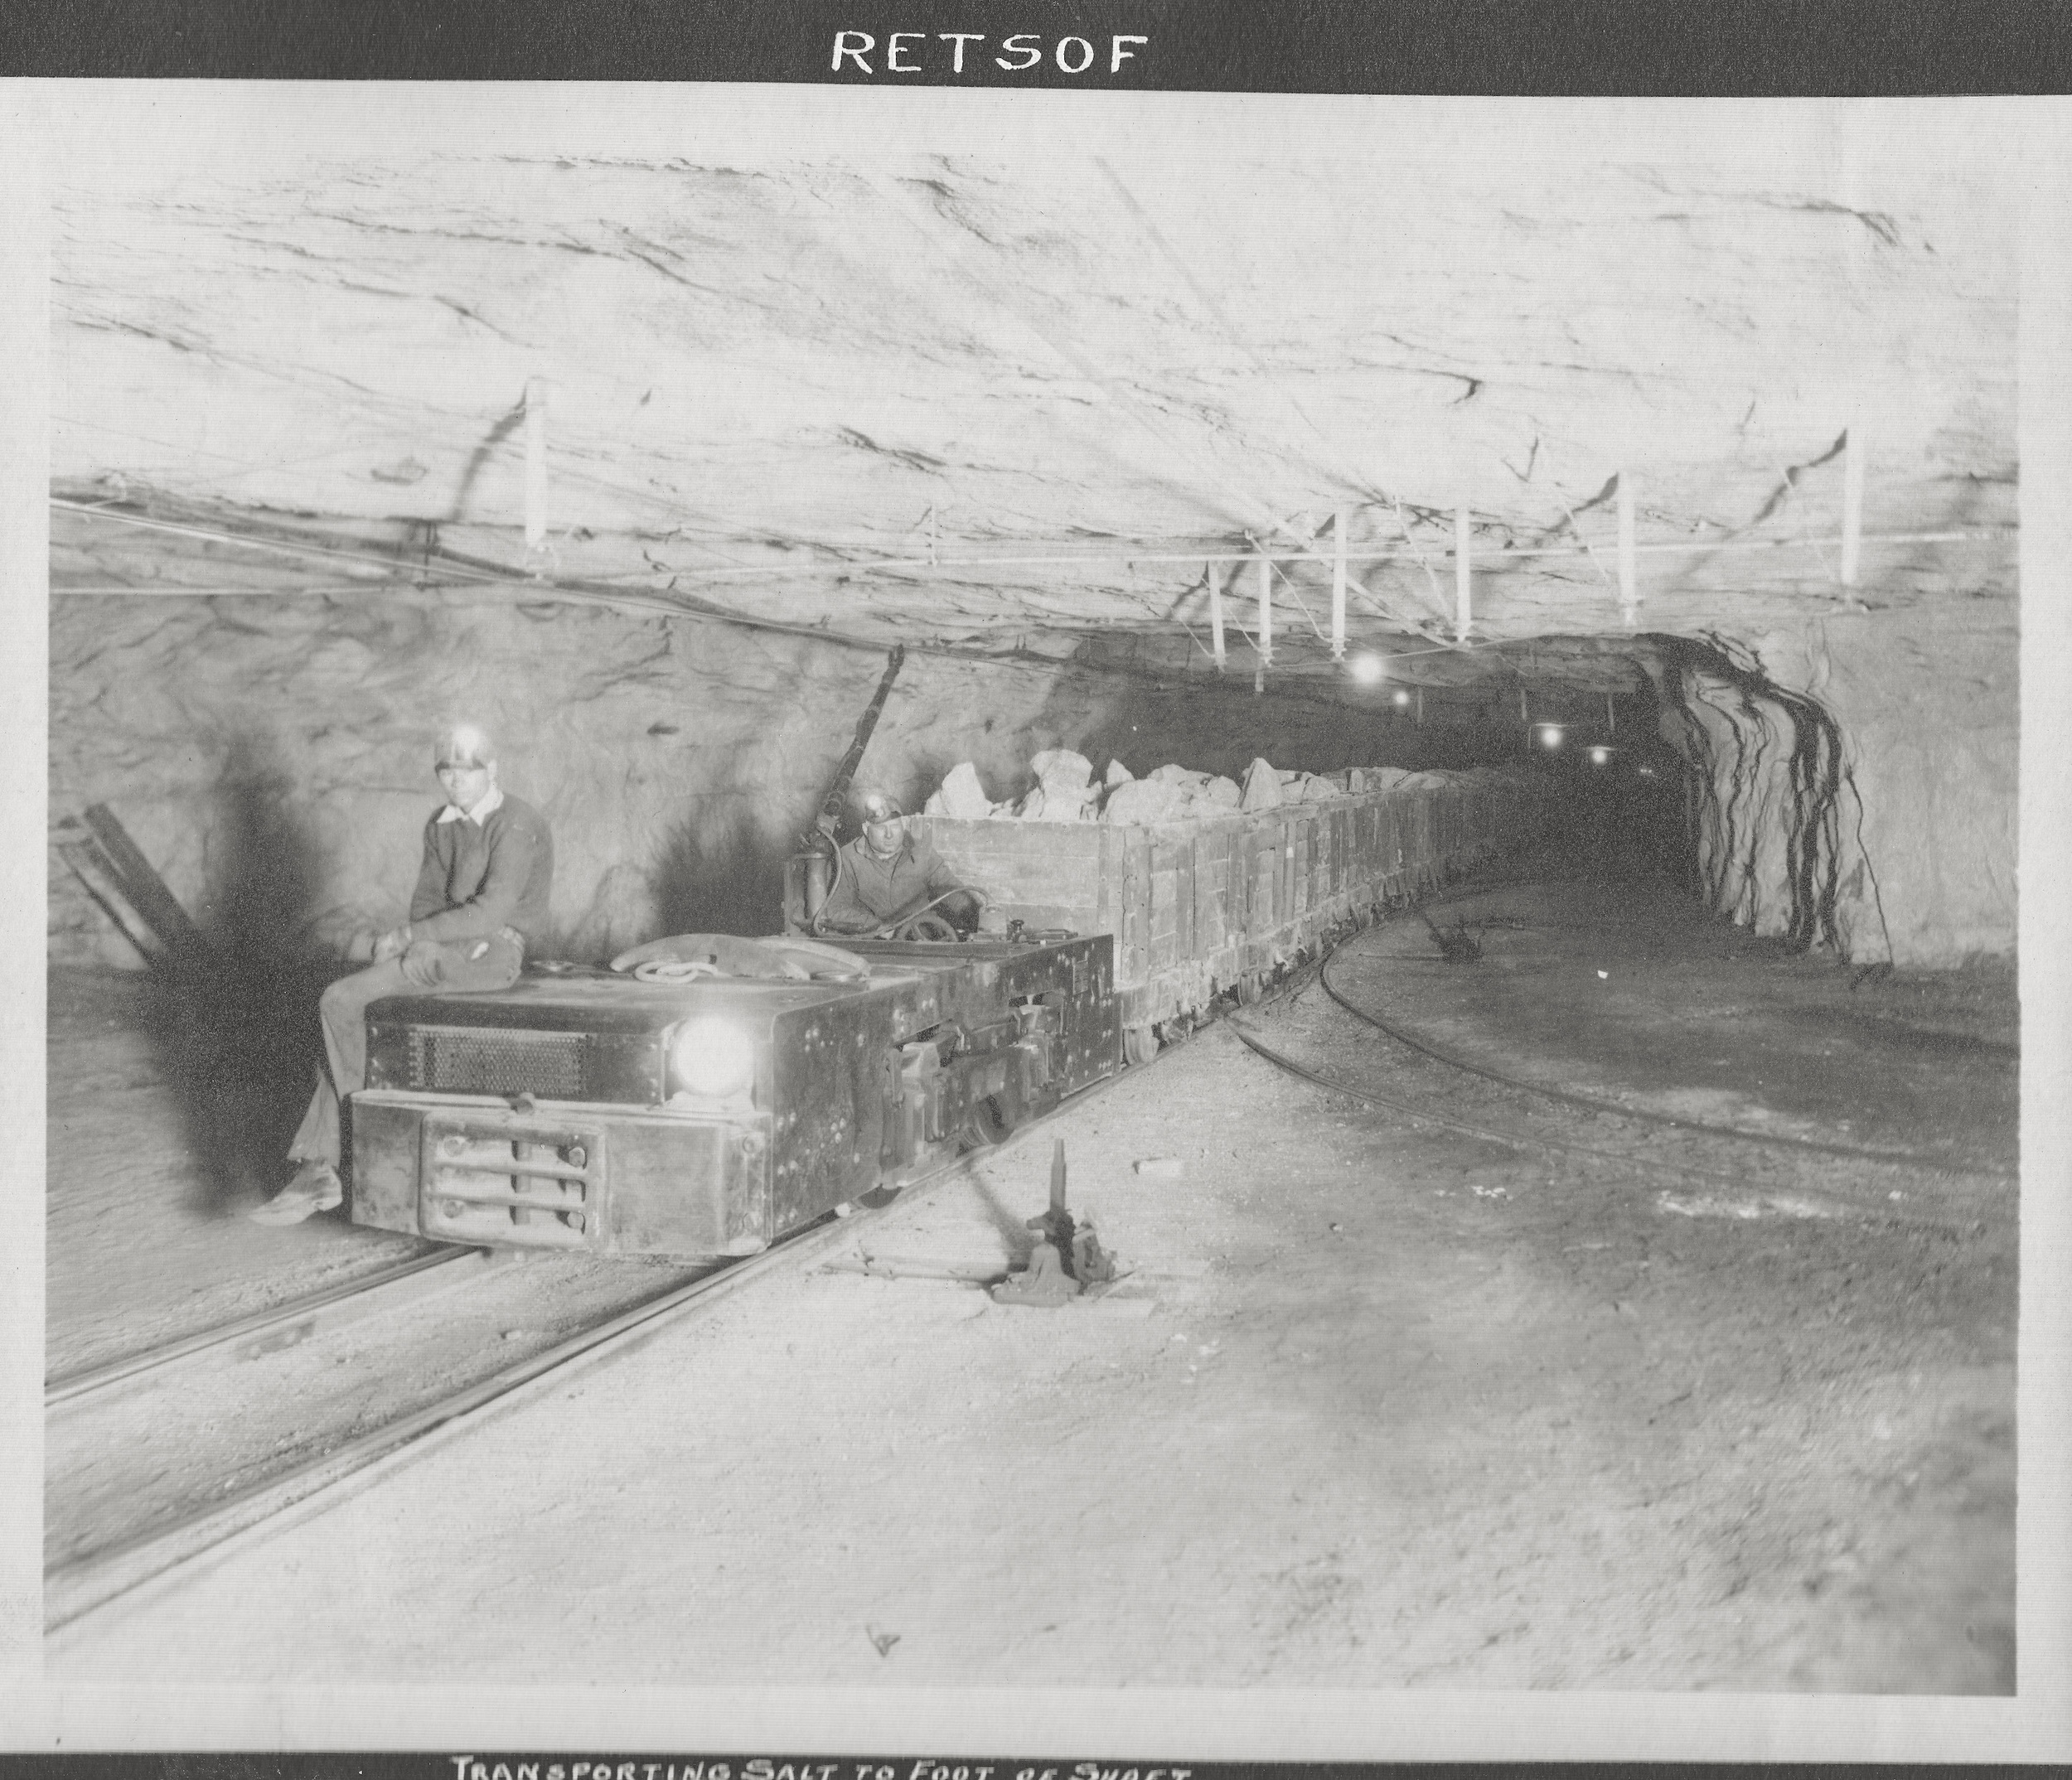  Transporting salt to foot of shaft in the Retsof Salt Mine. 